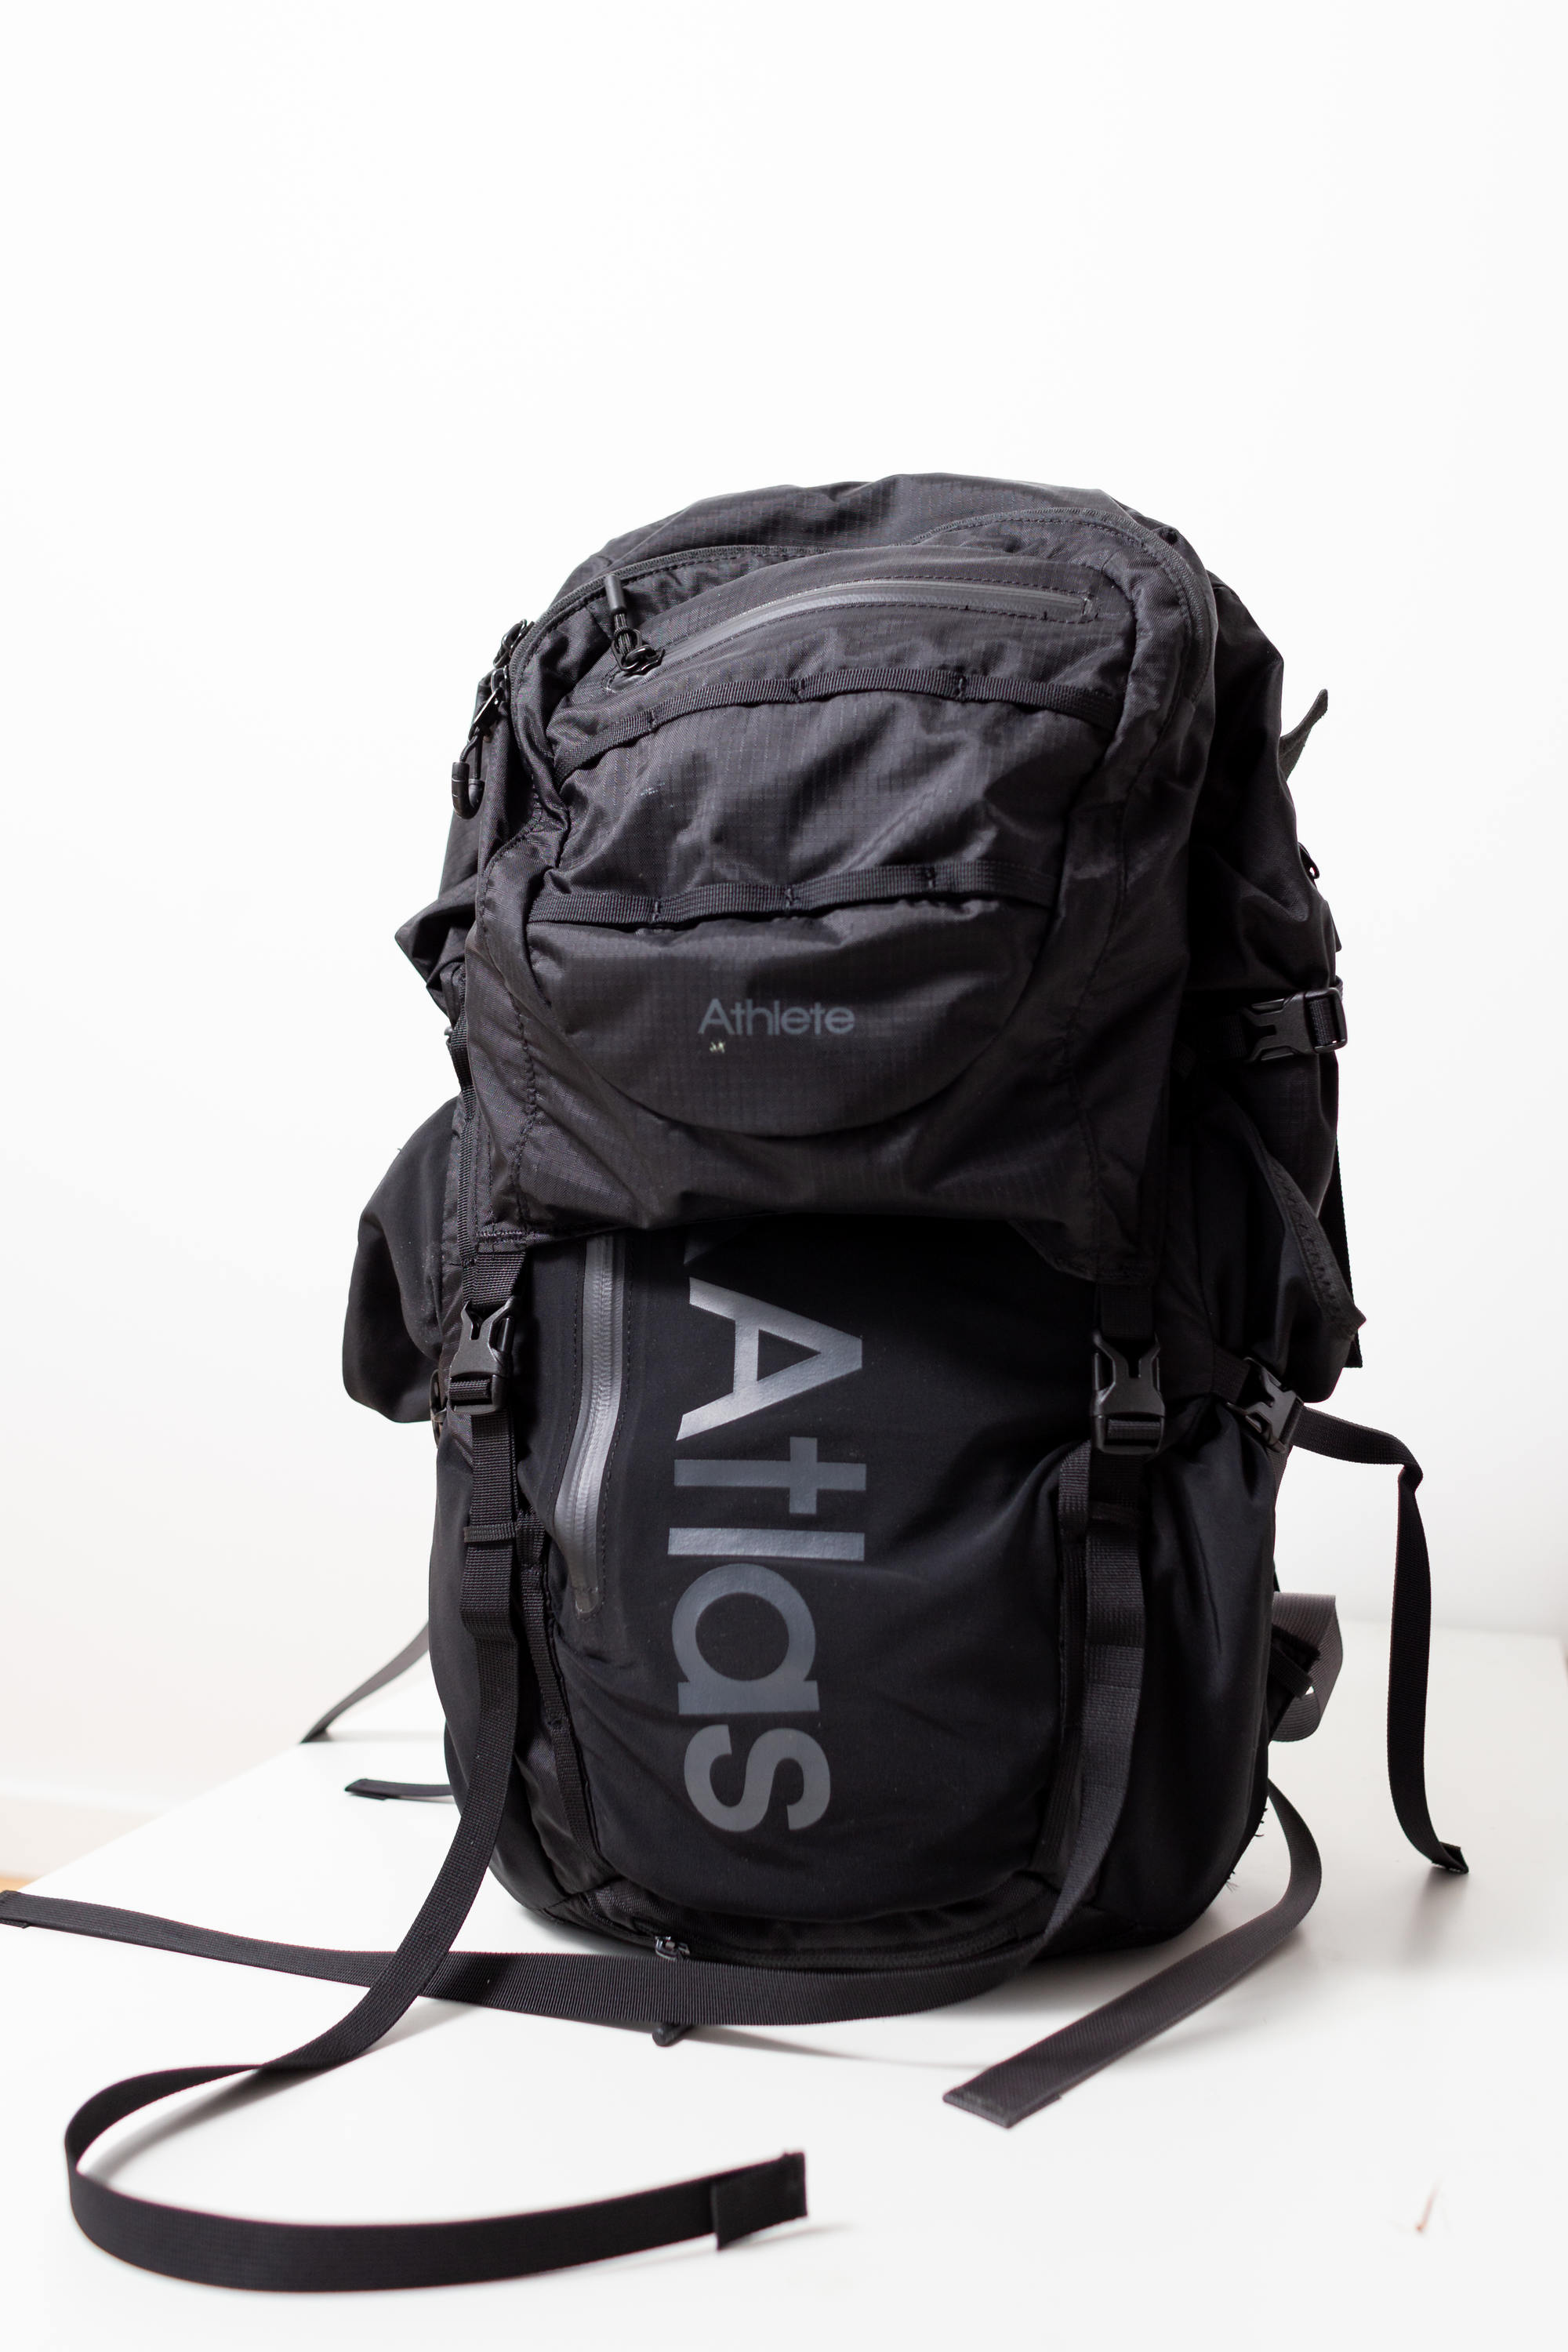 atlas athlete camera backpack